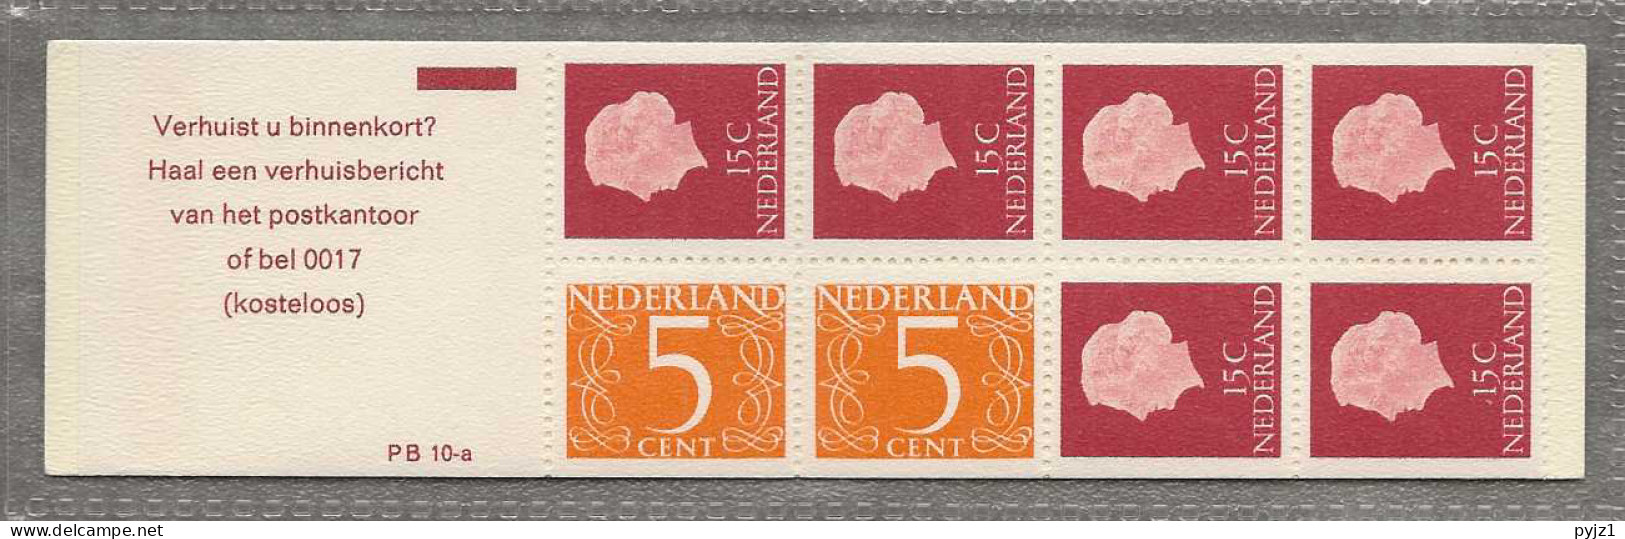 1971 MNH Nederland NVPH PB 10aF - Cuadernillos